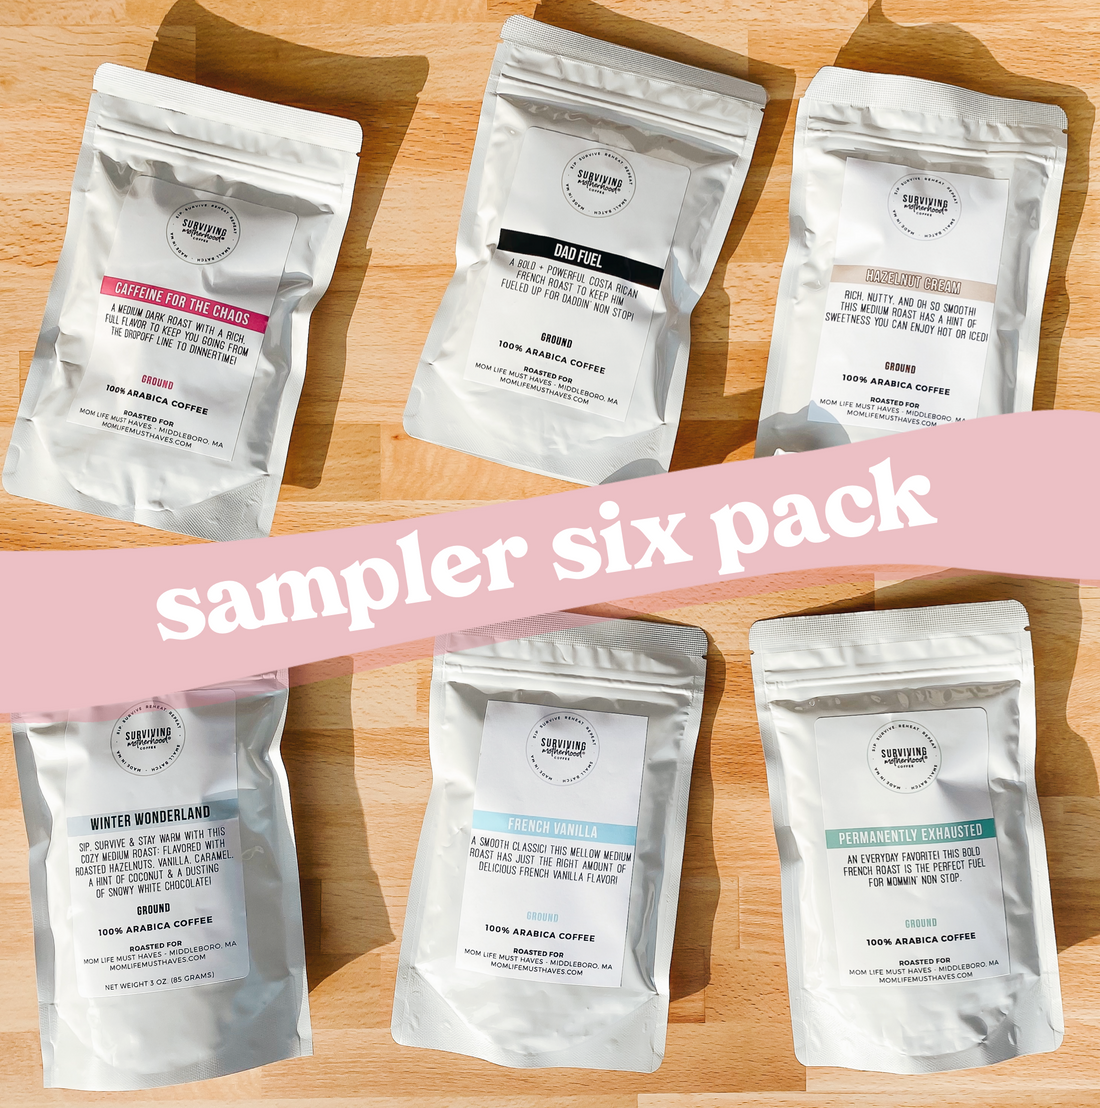 SURPRISE Sampler Six Pack - Surviving Motherhood Coffee